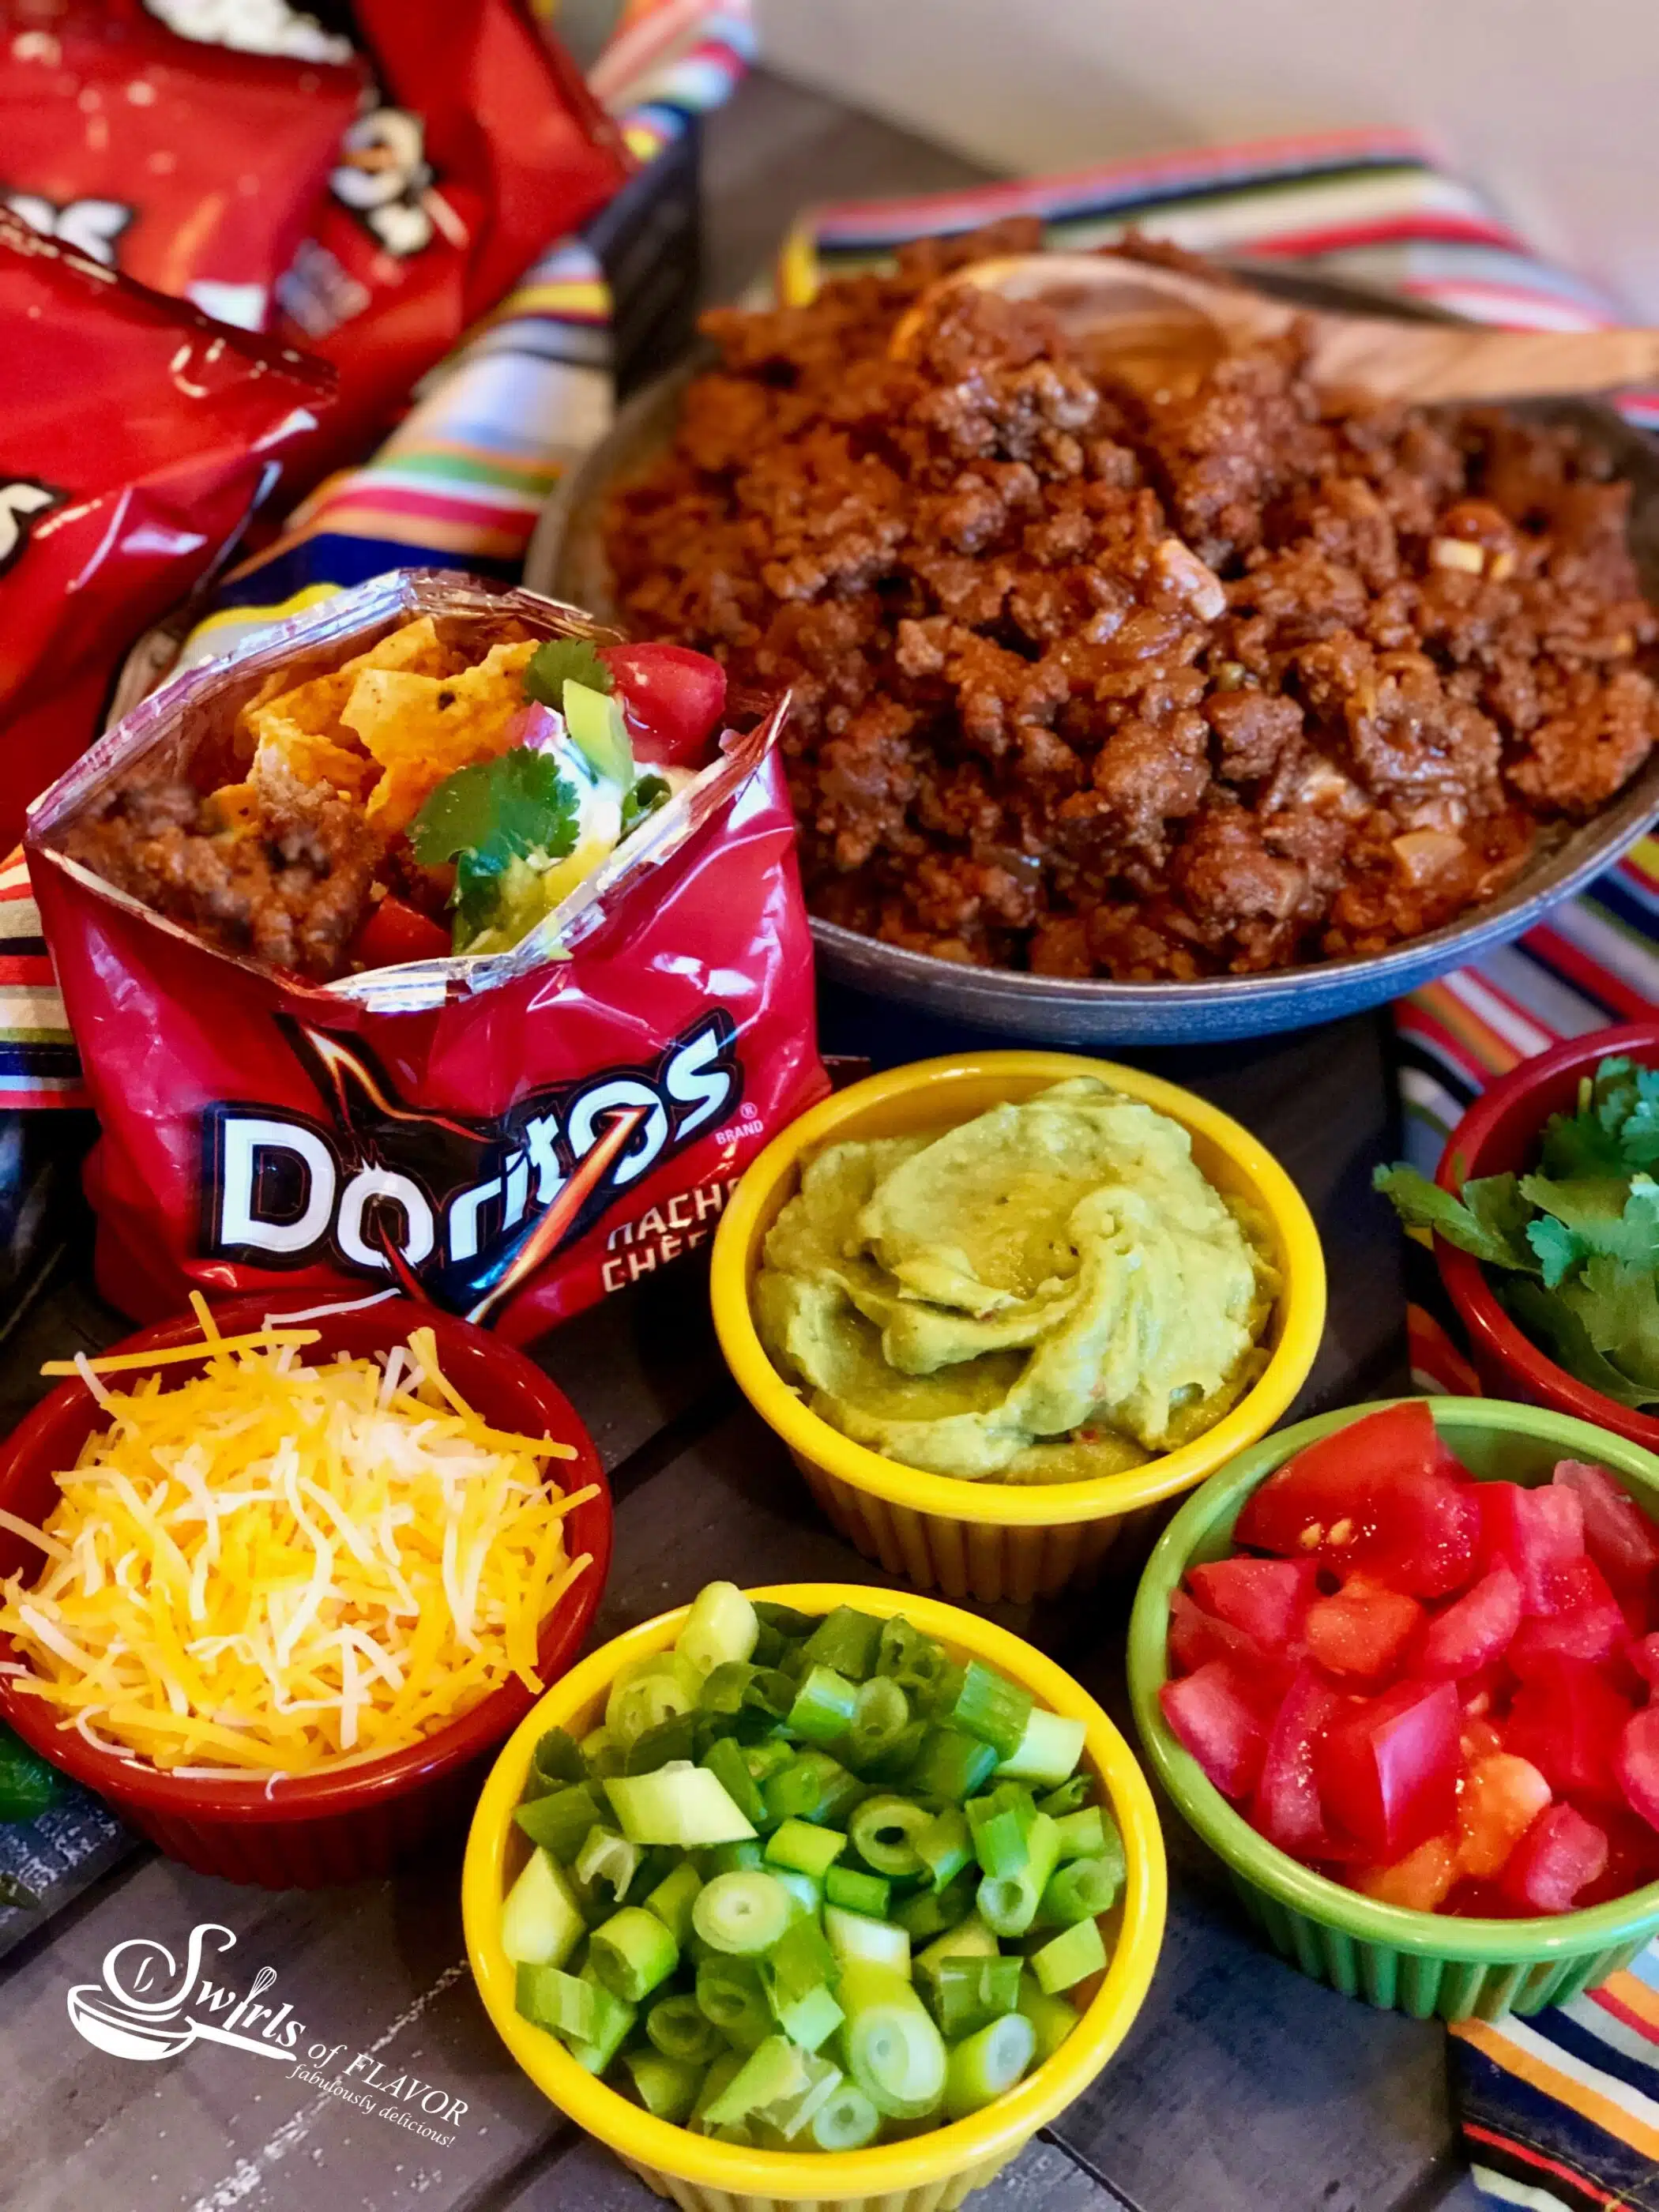 Walking Taco Bar ingredients in bowls with Doritos bag